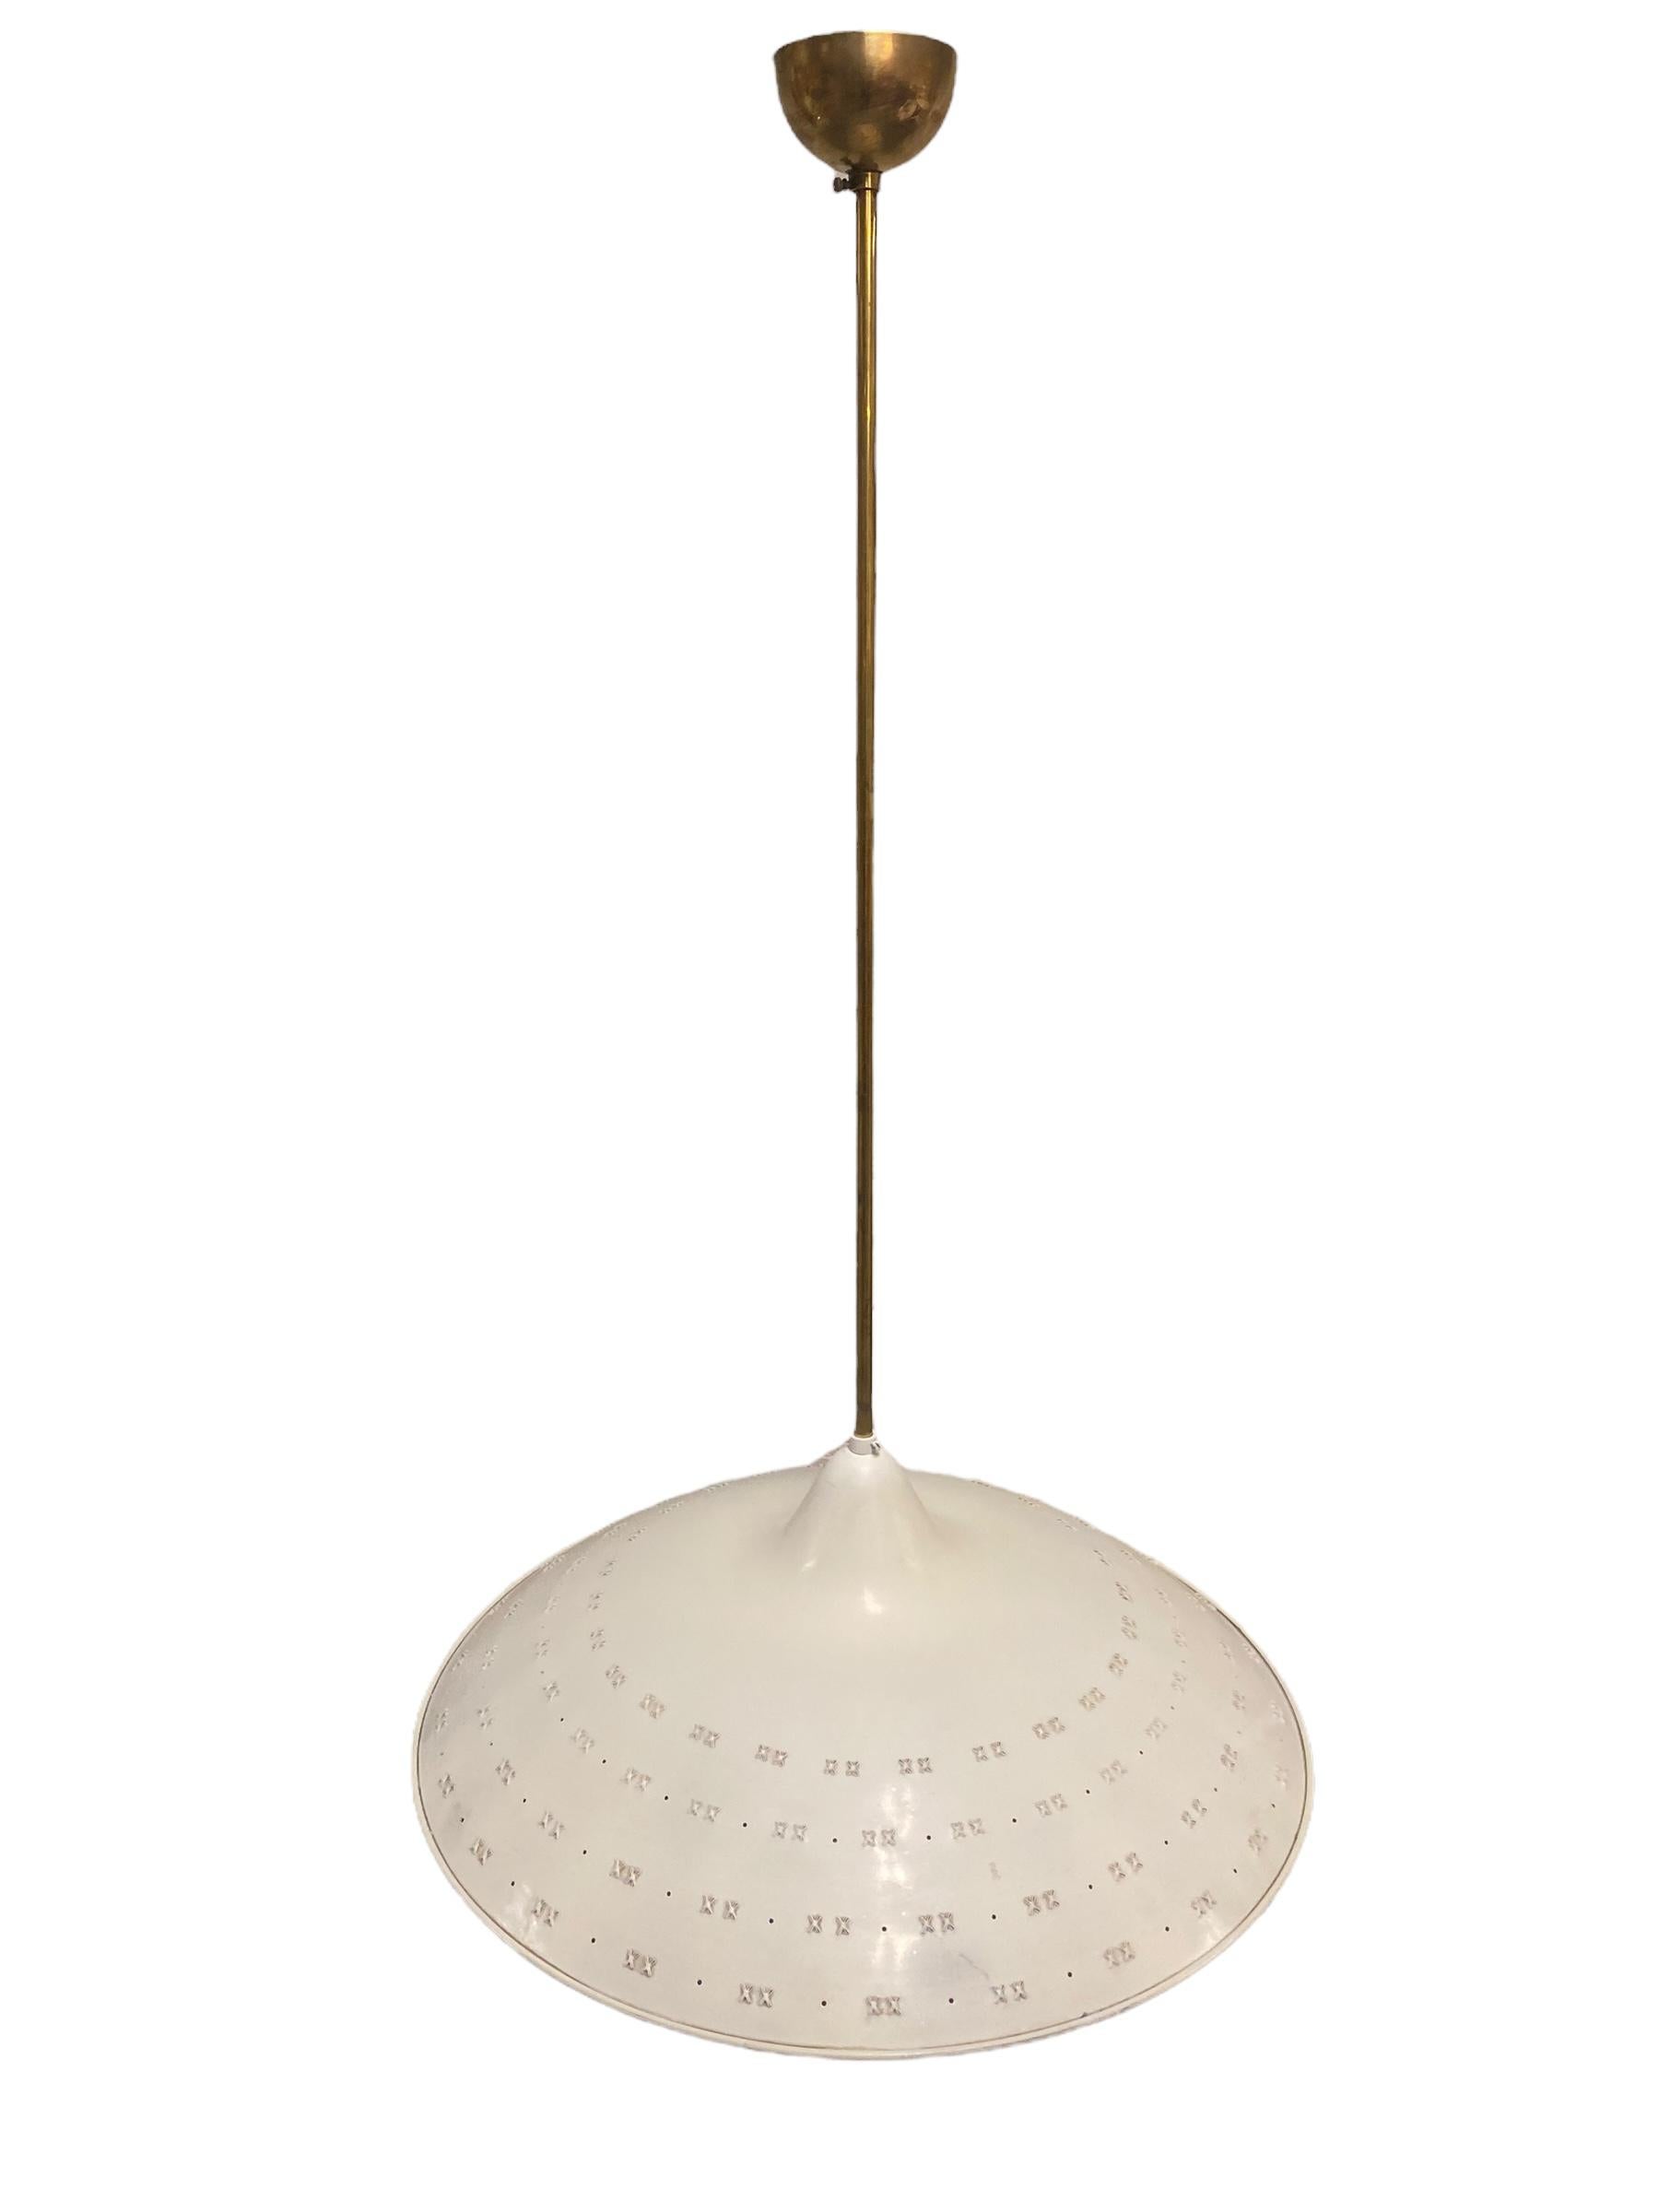 A Rare Lisa-Johansson Pape Ceiling Lamp FN 03-433, Orno 1950s 3